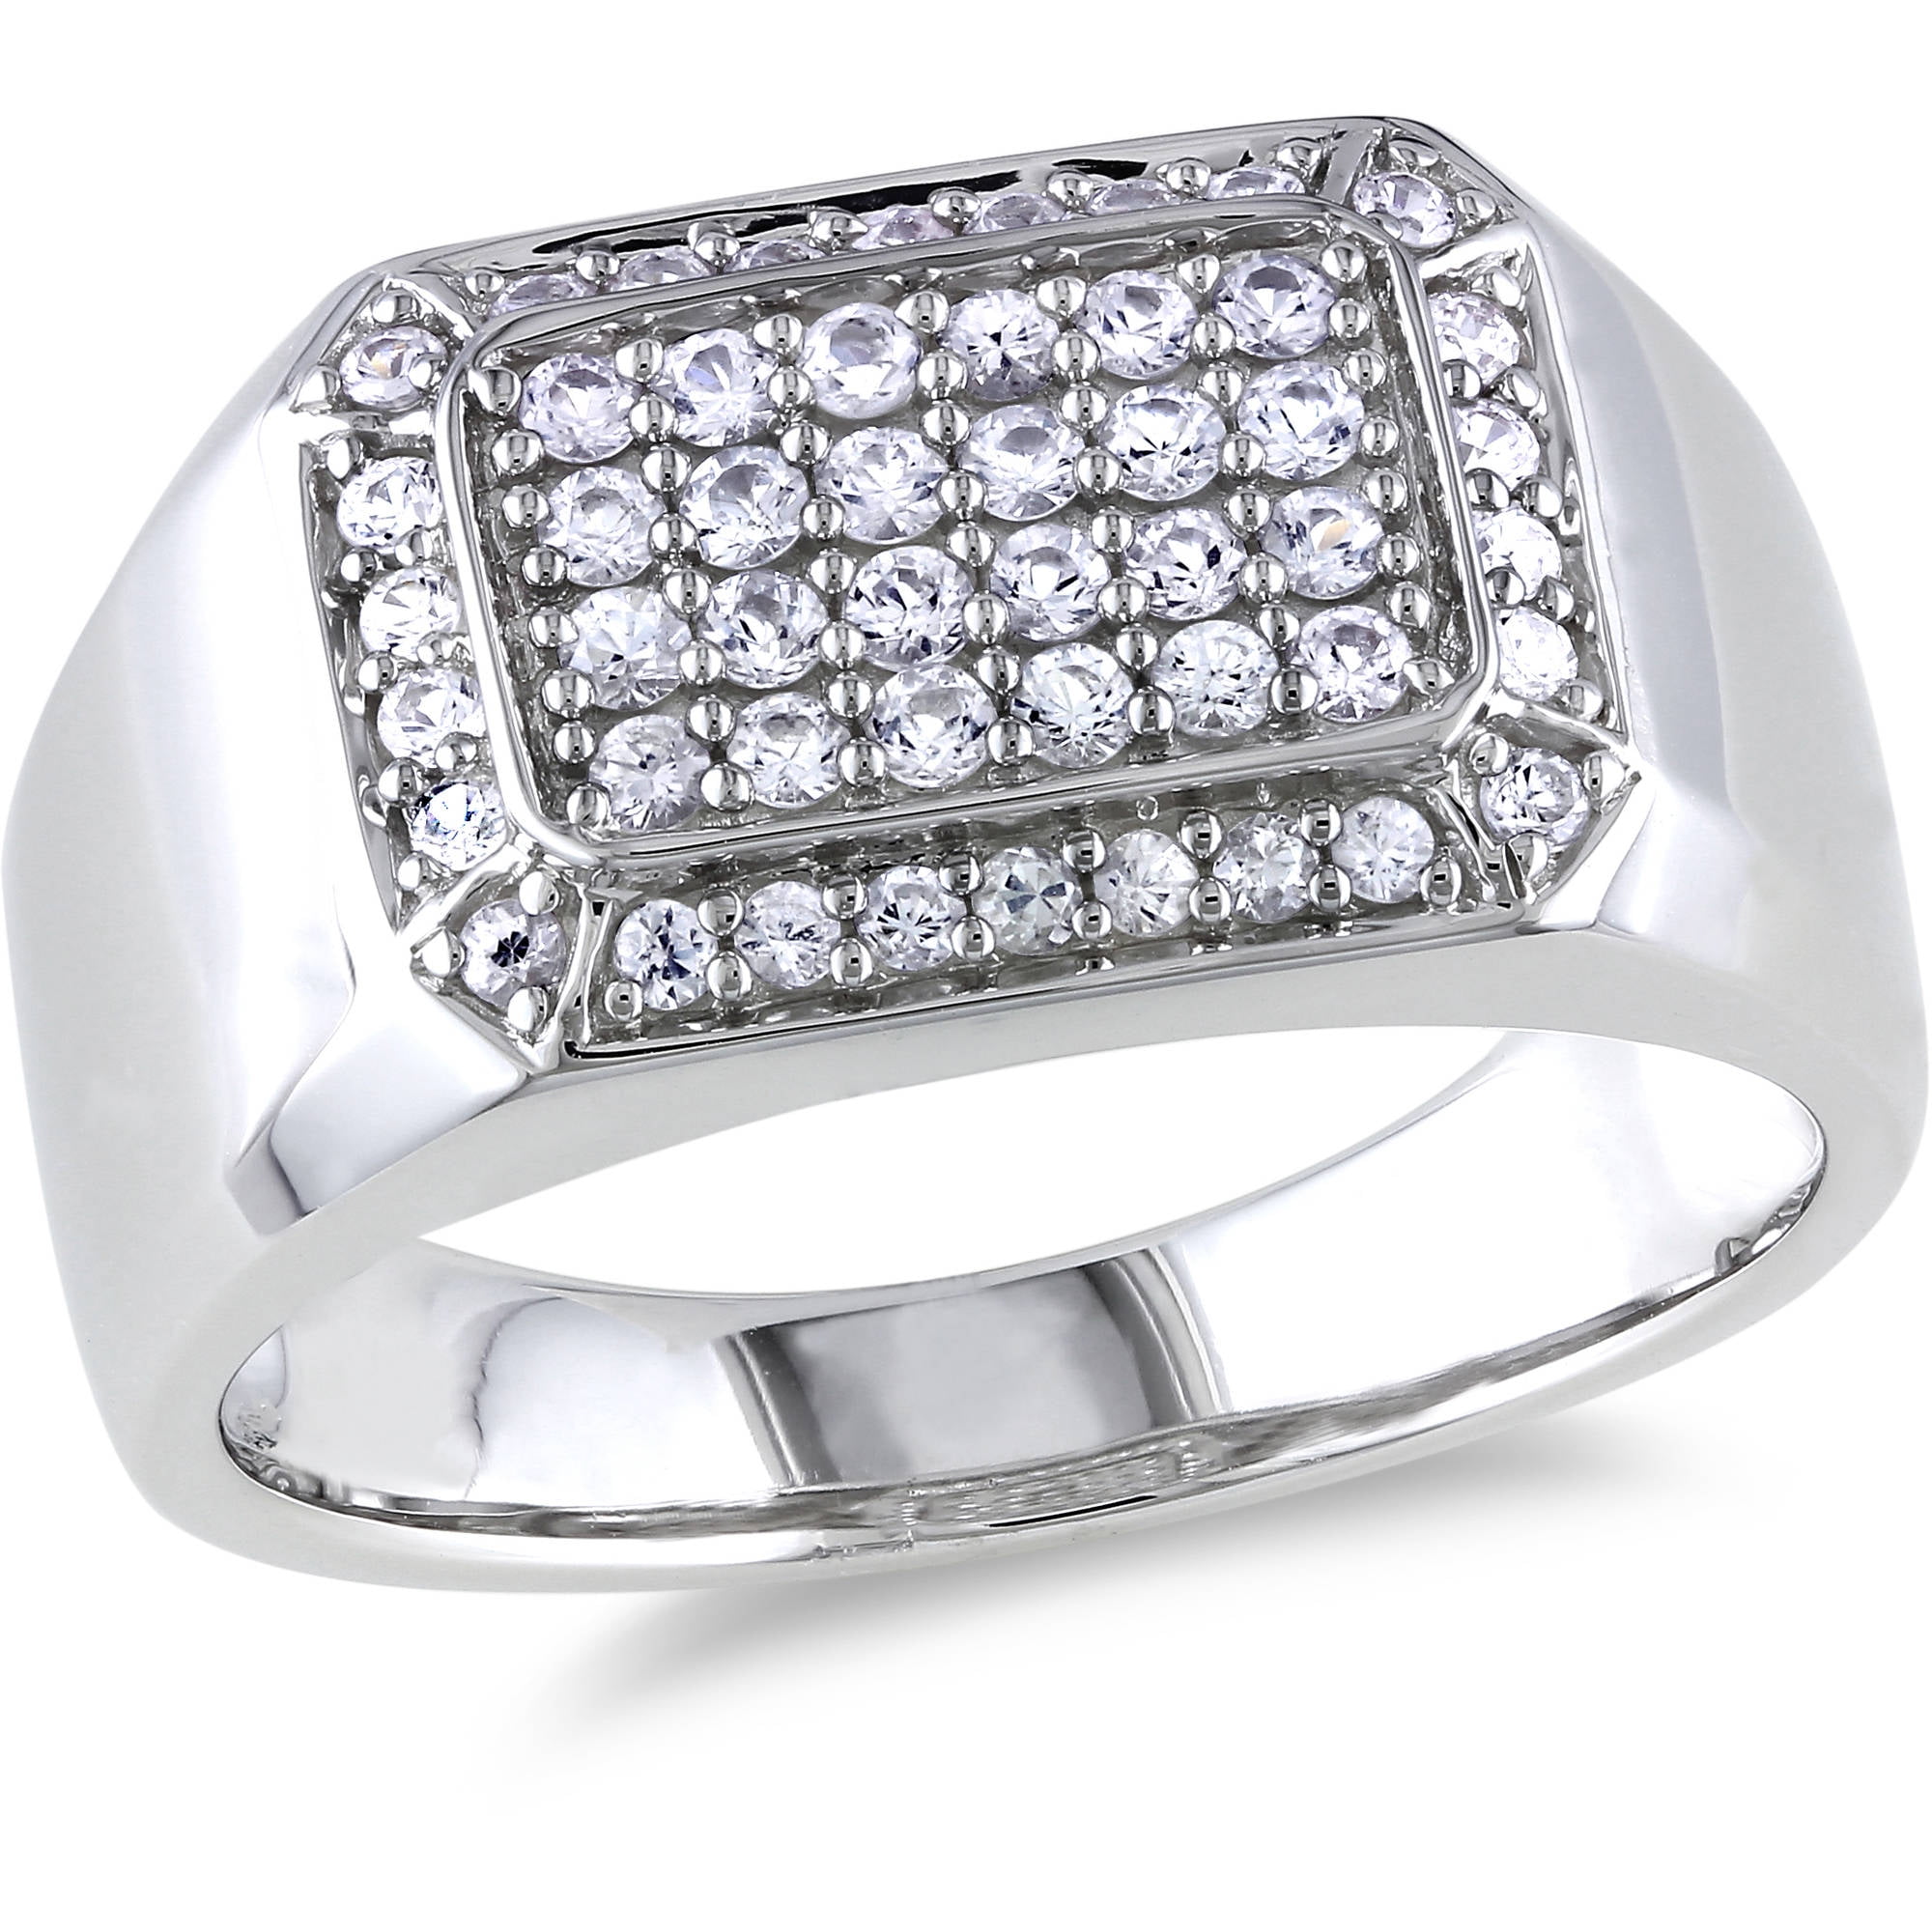 5/8 Carat T.G.W. White Sapphire Men's Ring in Sterling Silver - Walmart.com